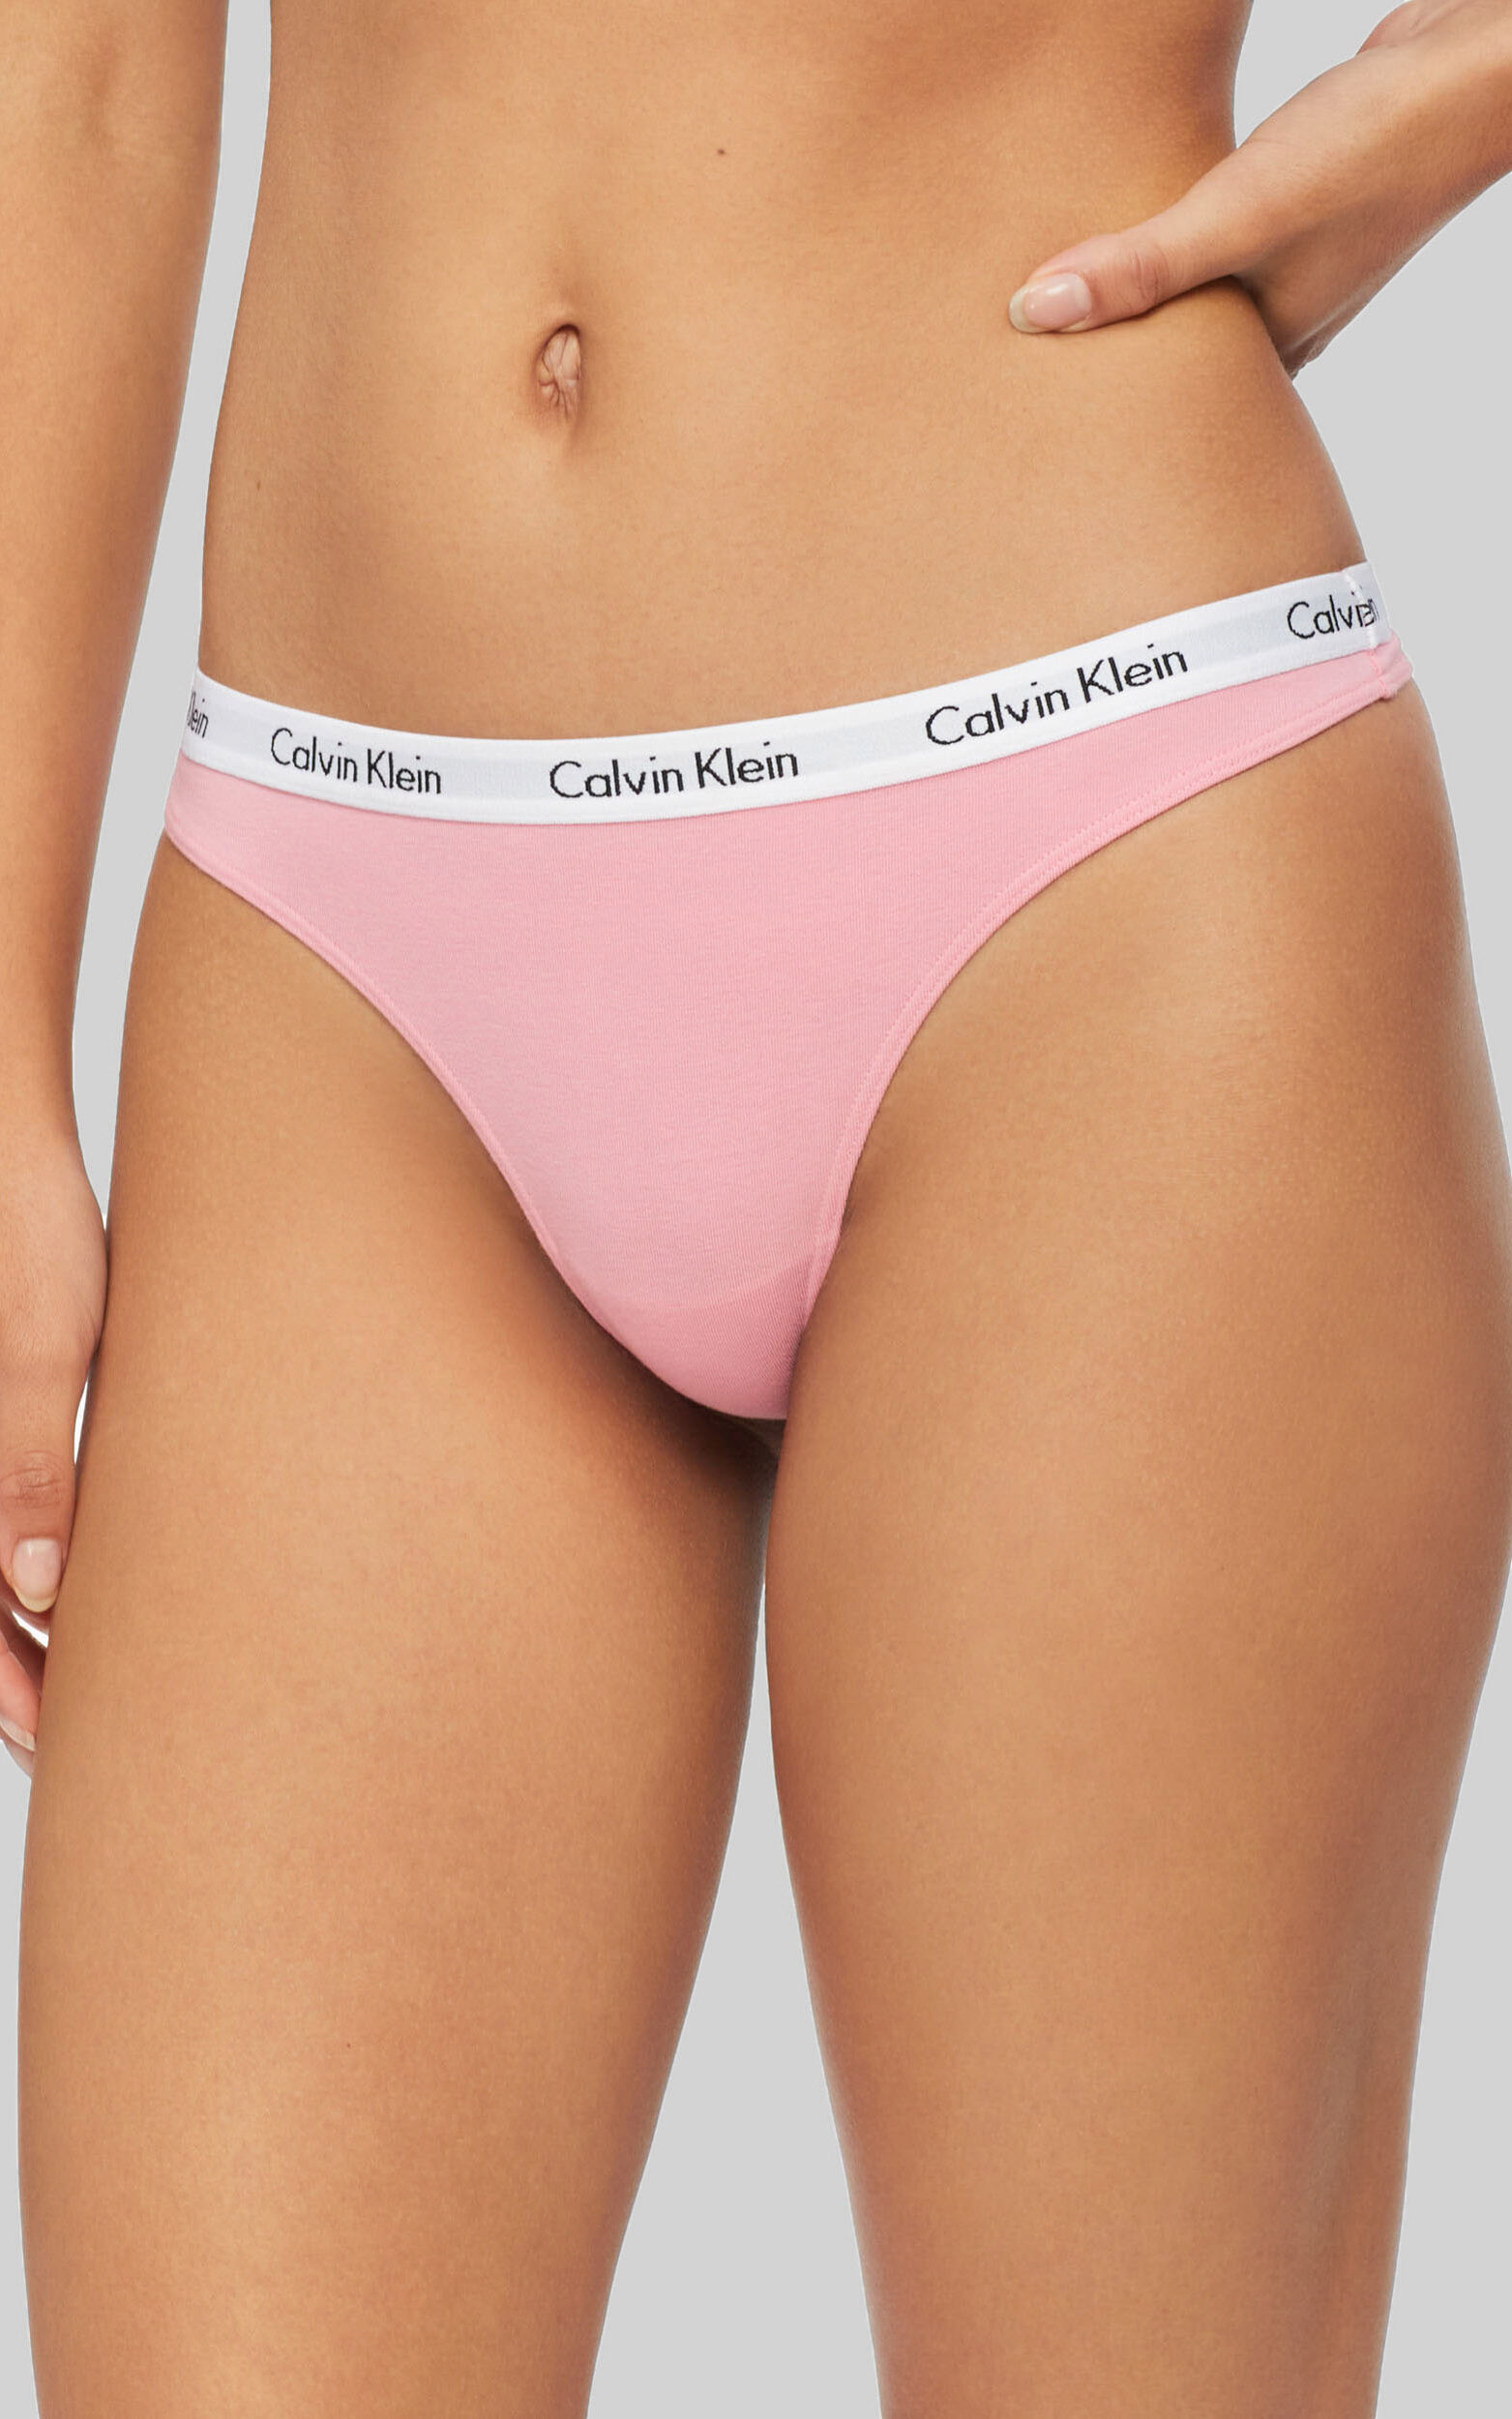 Calvin Klein - Pride Carousel Thong 5 pack in Multi Pack